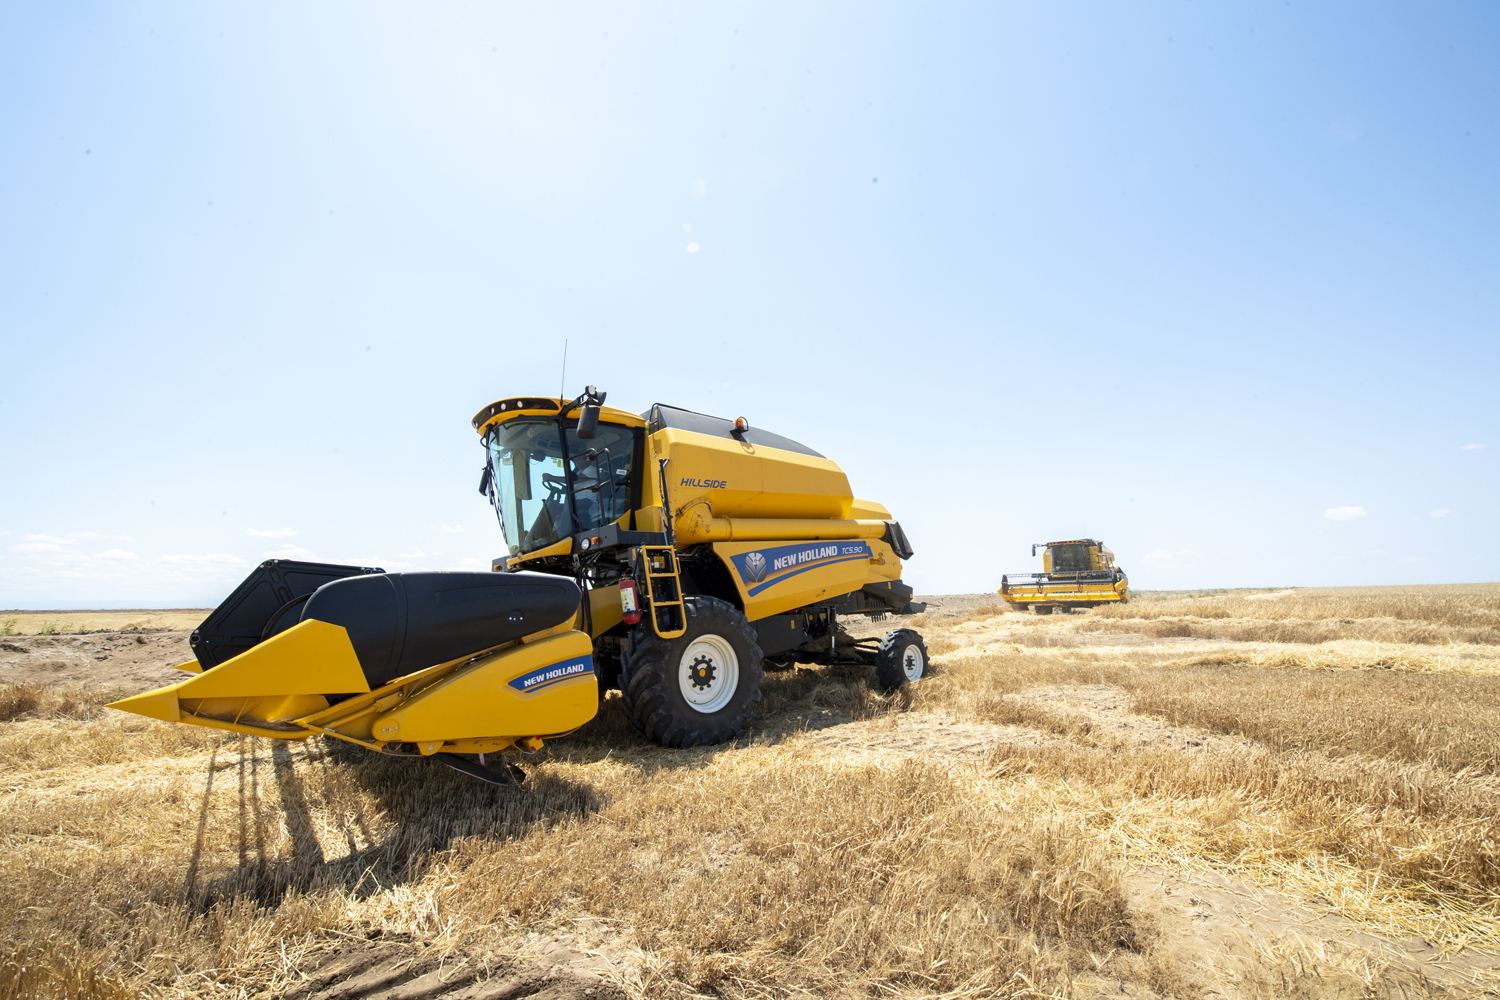 Kazakhstan intends to ban export of grain forage